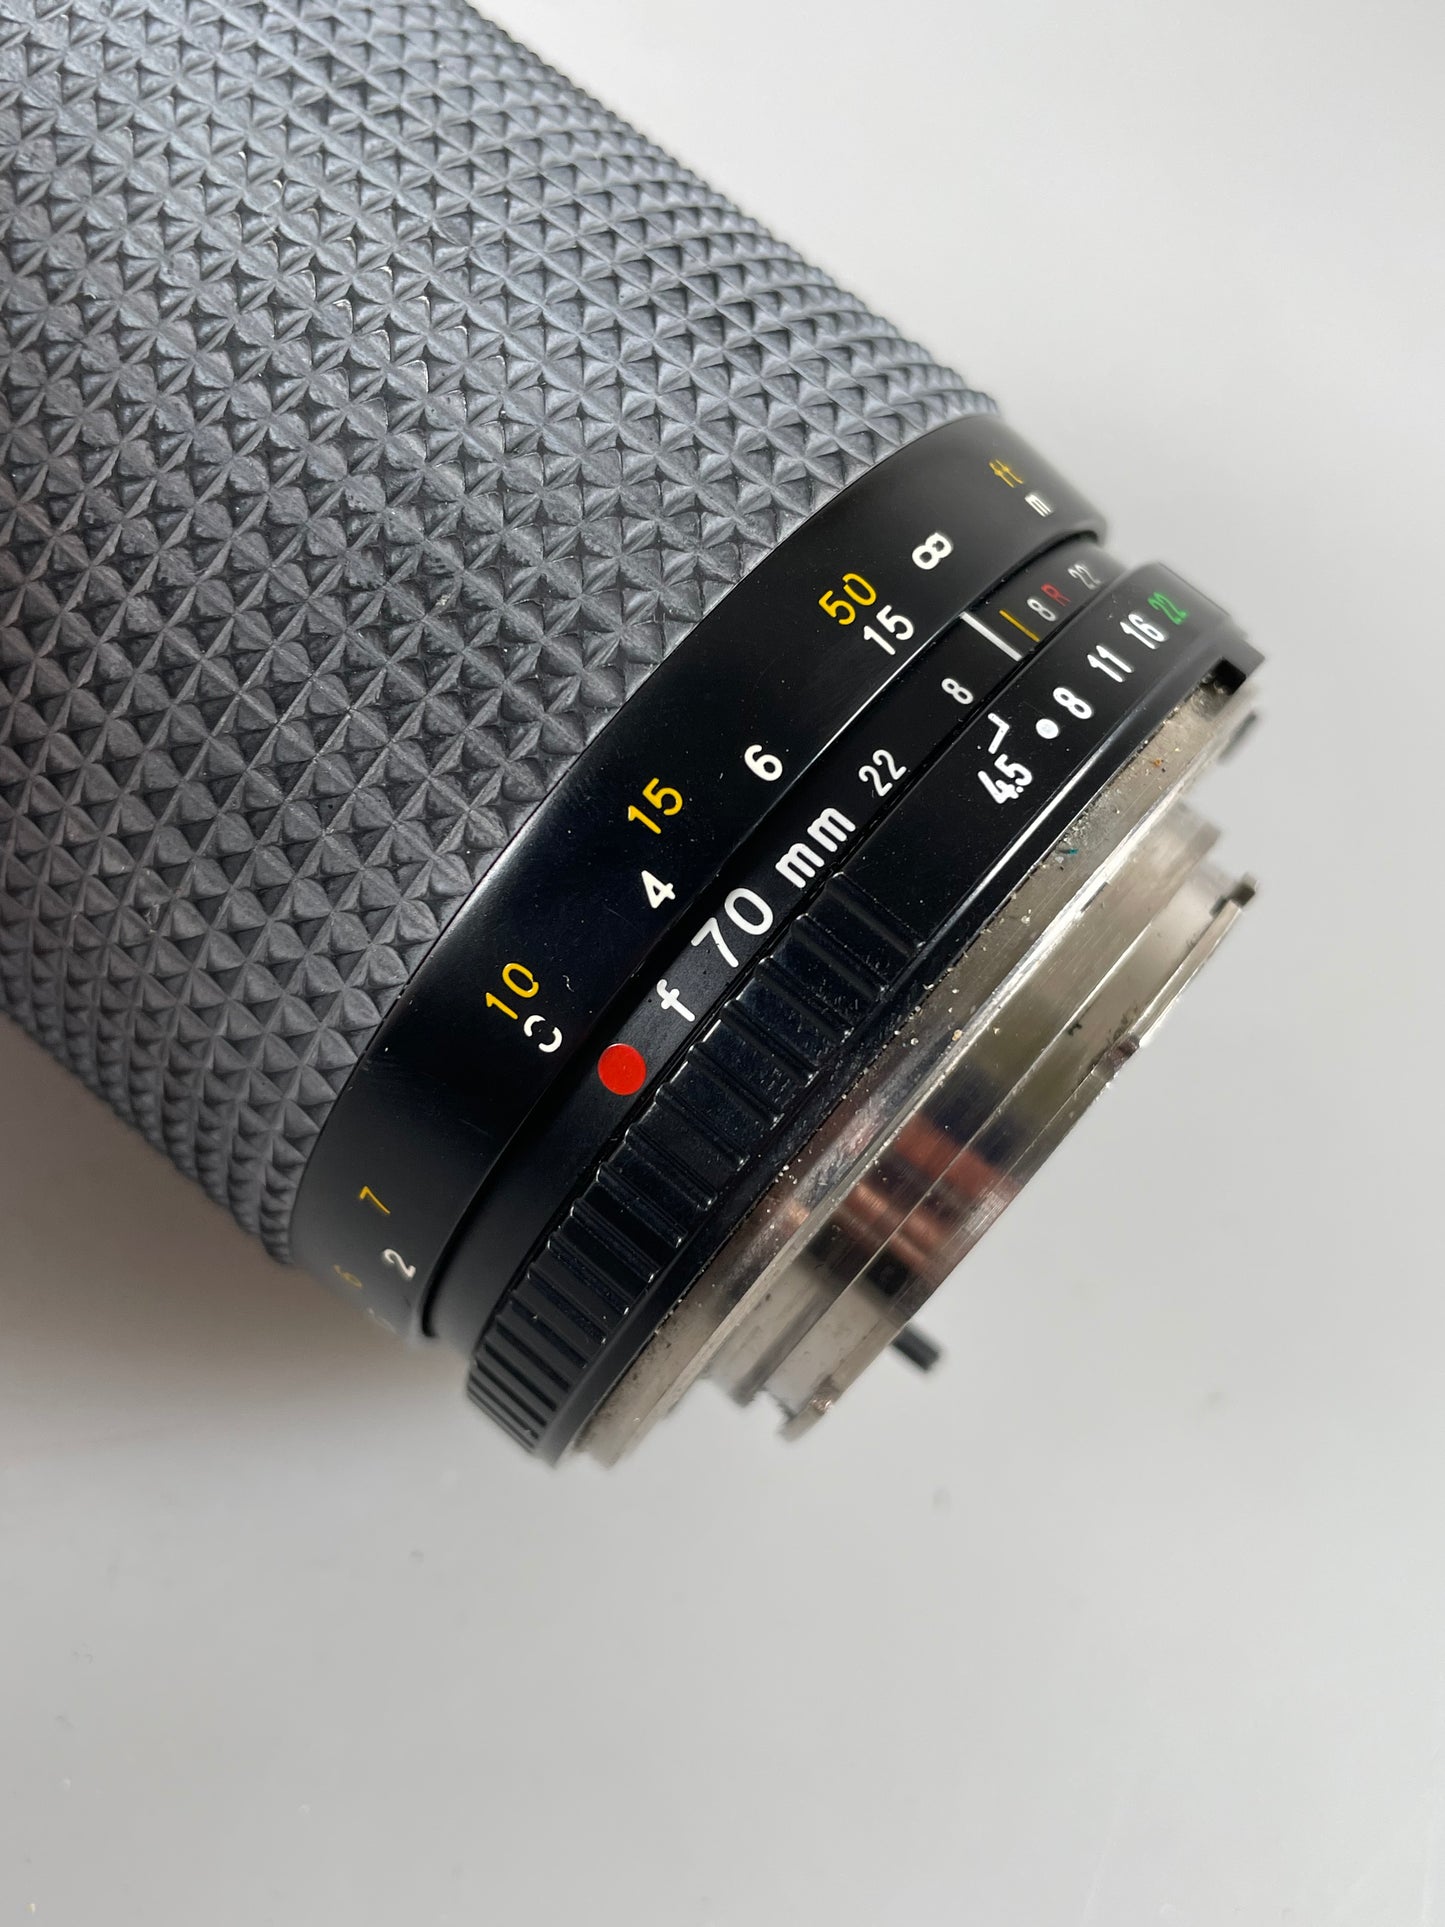 Minolta MD 70-210mm f4.5-5.6 Manual Focus Macro Zoom lens